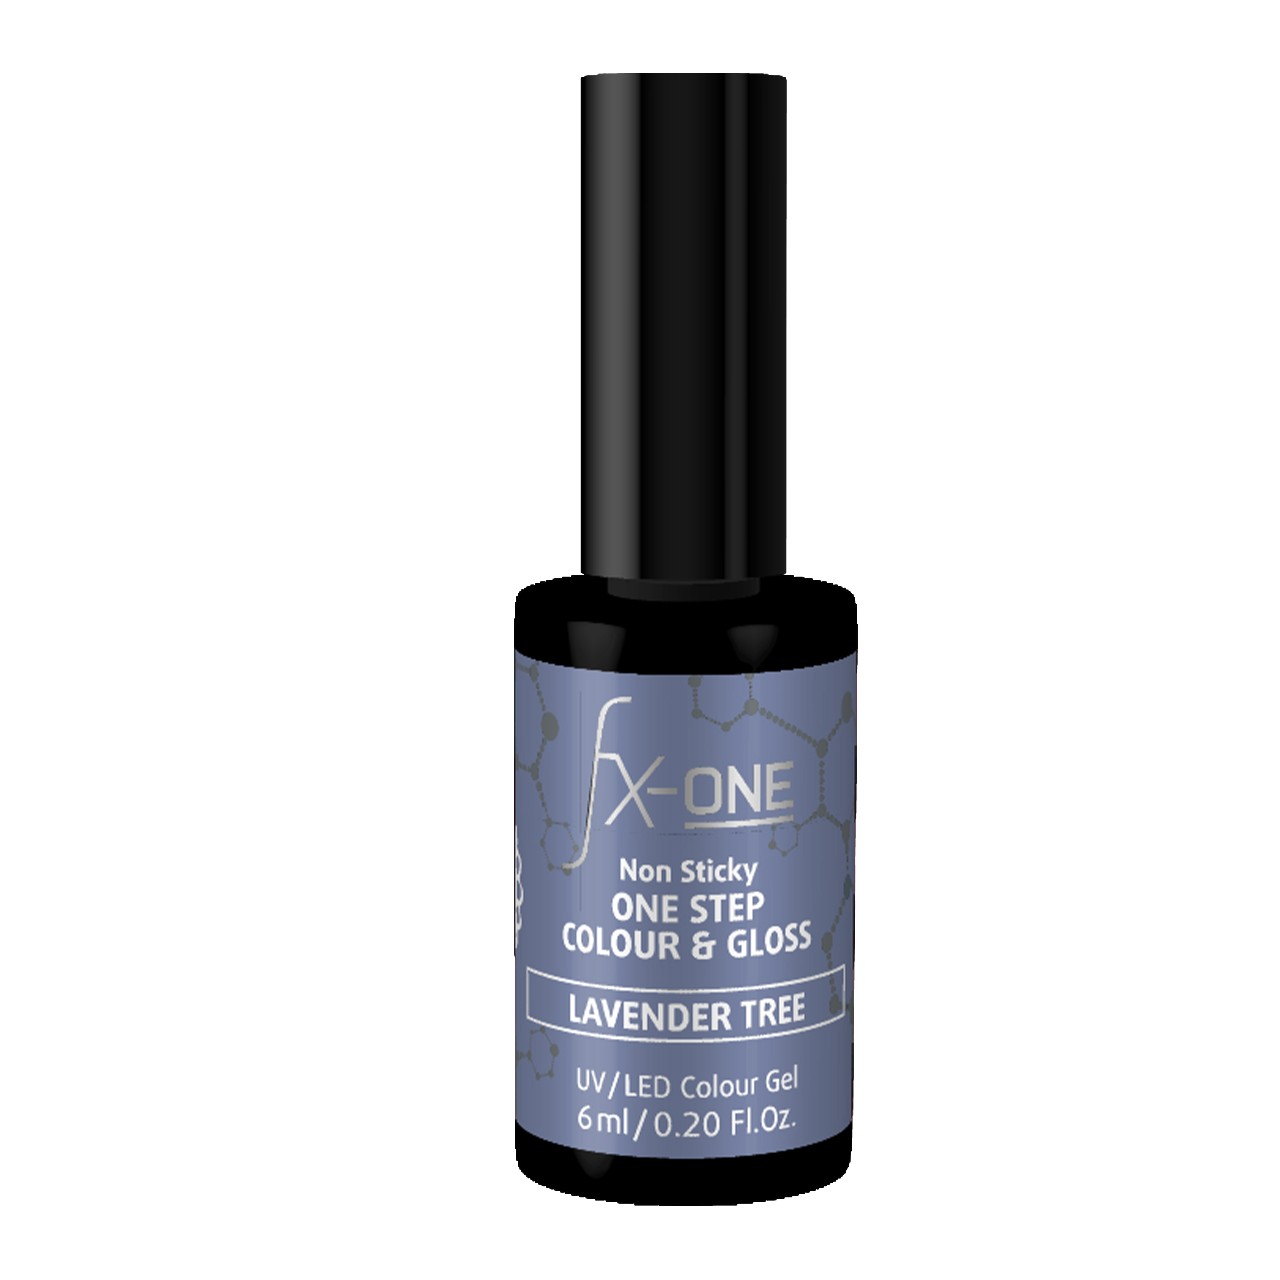 FX-One Colour & Gloss Lavender Tree 6ml